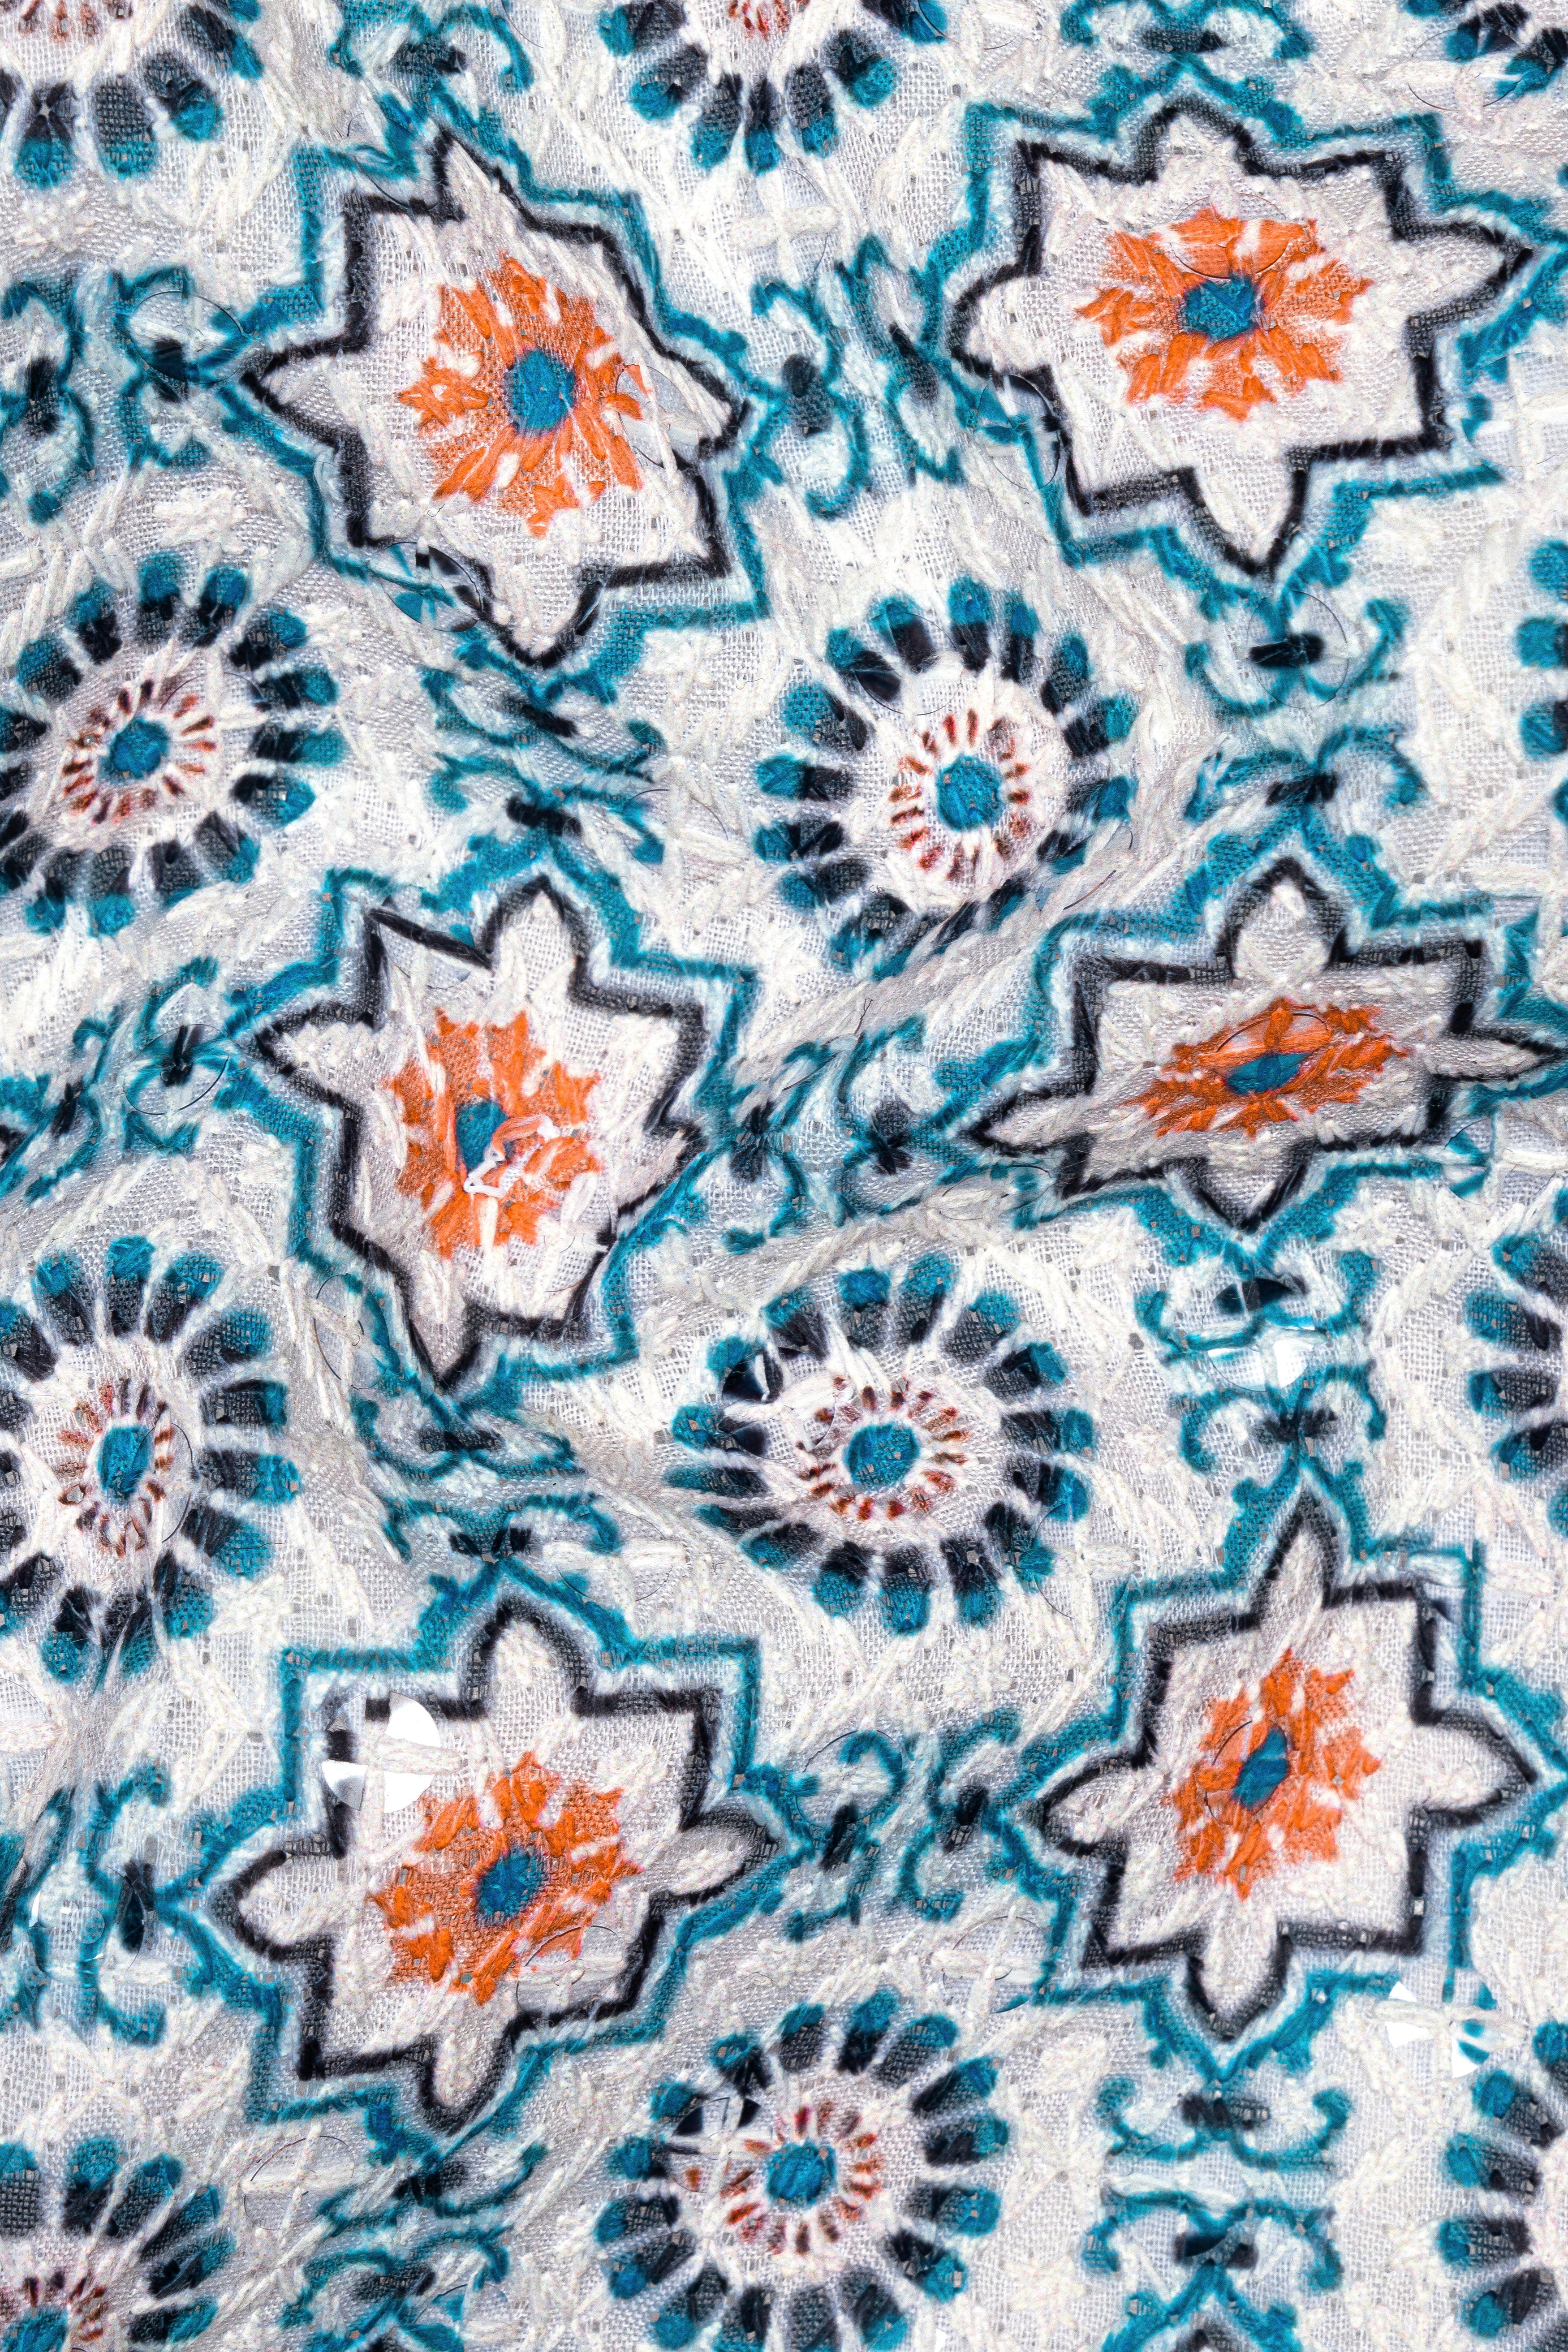 Persian Blue And Crusta Orange hexagon Thread Embroidered Cross Placket Bandhgala Jodhpuri